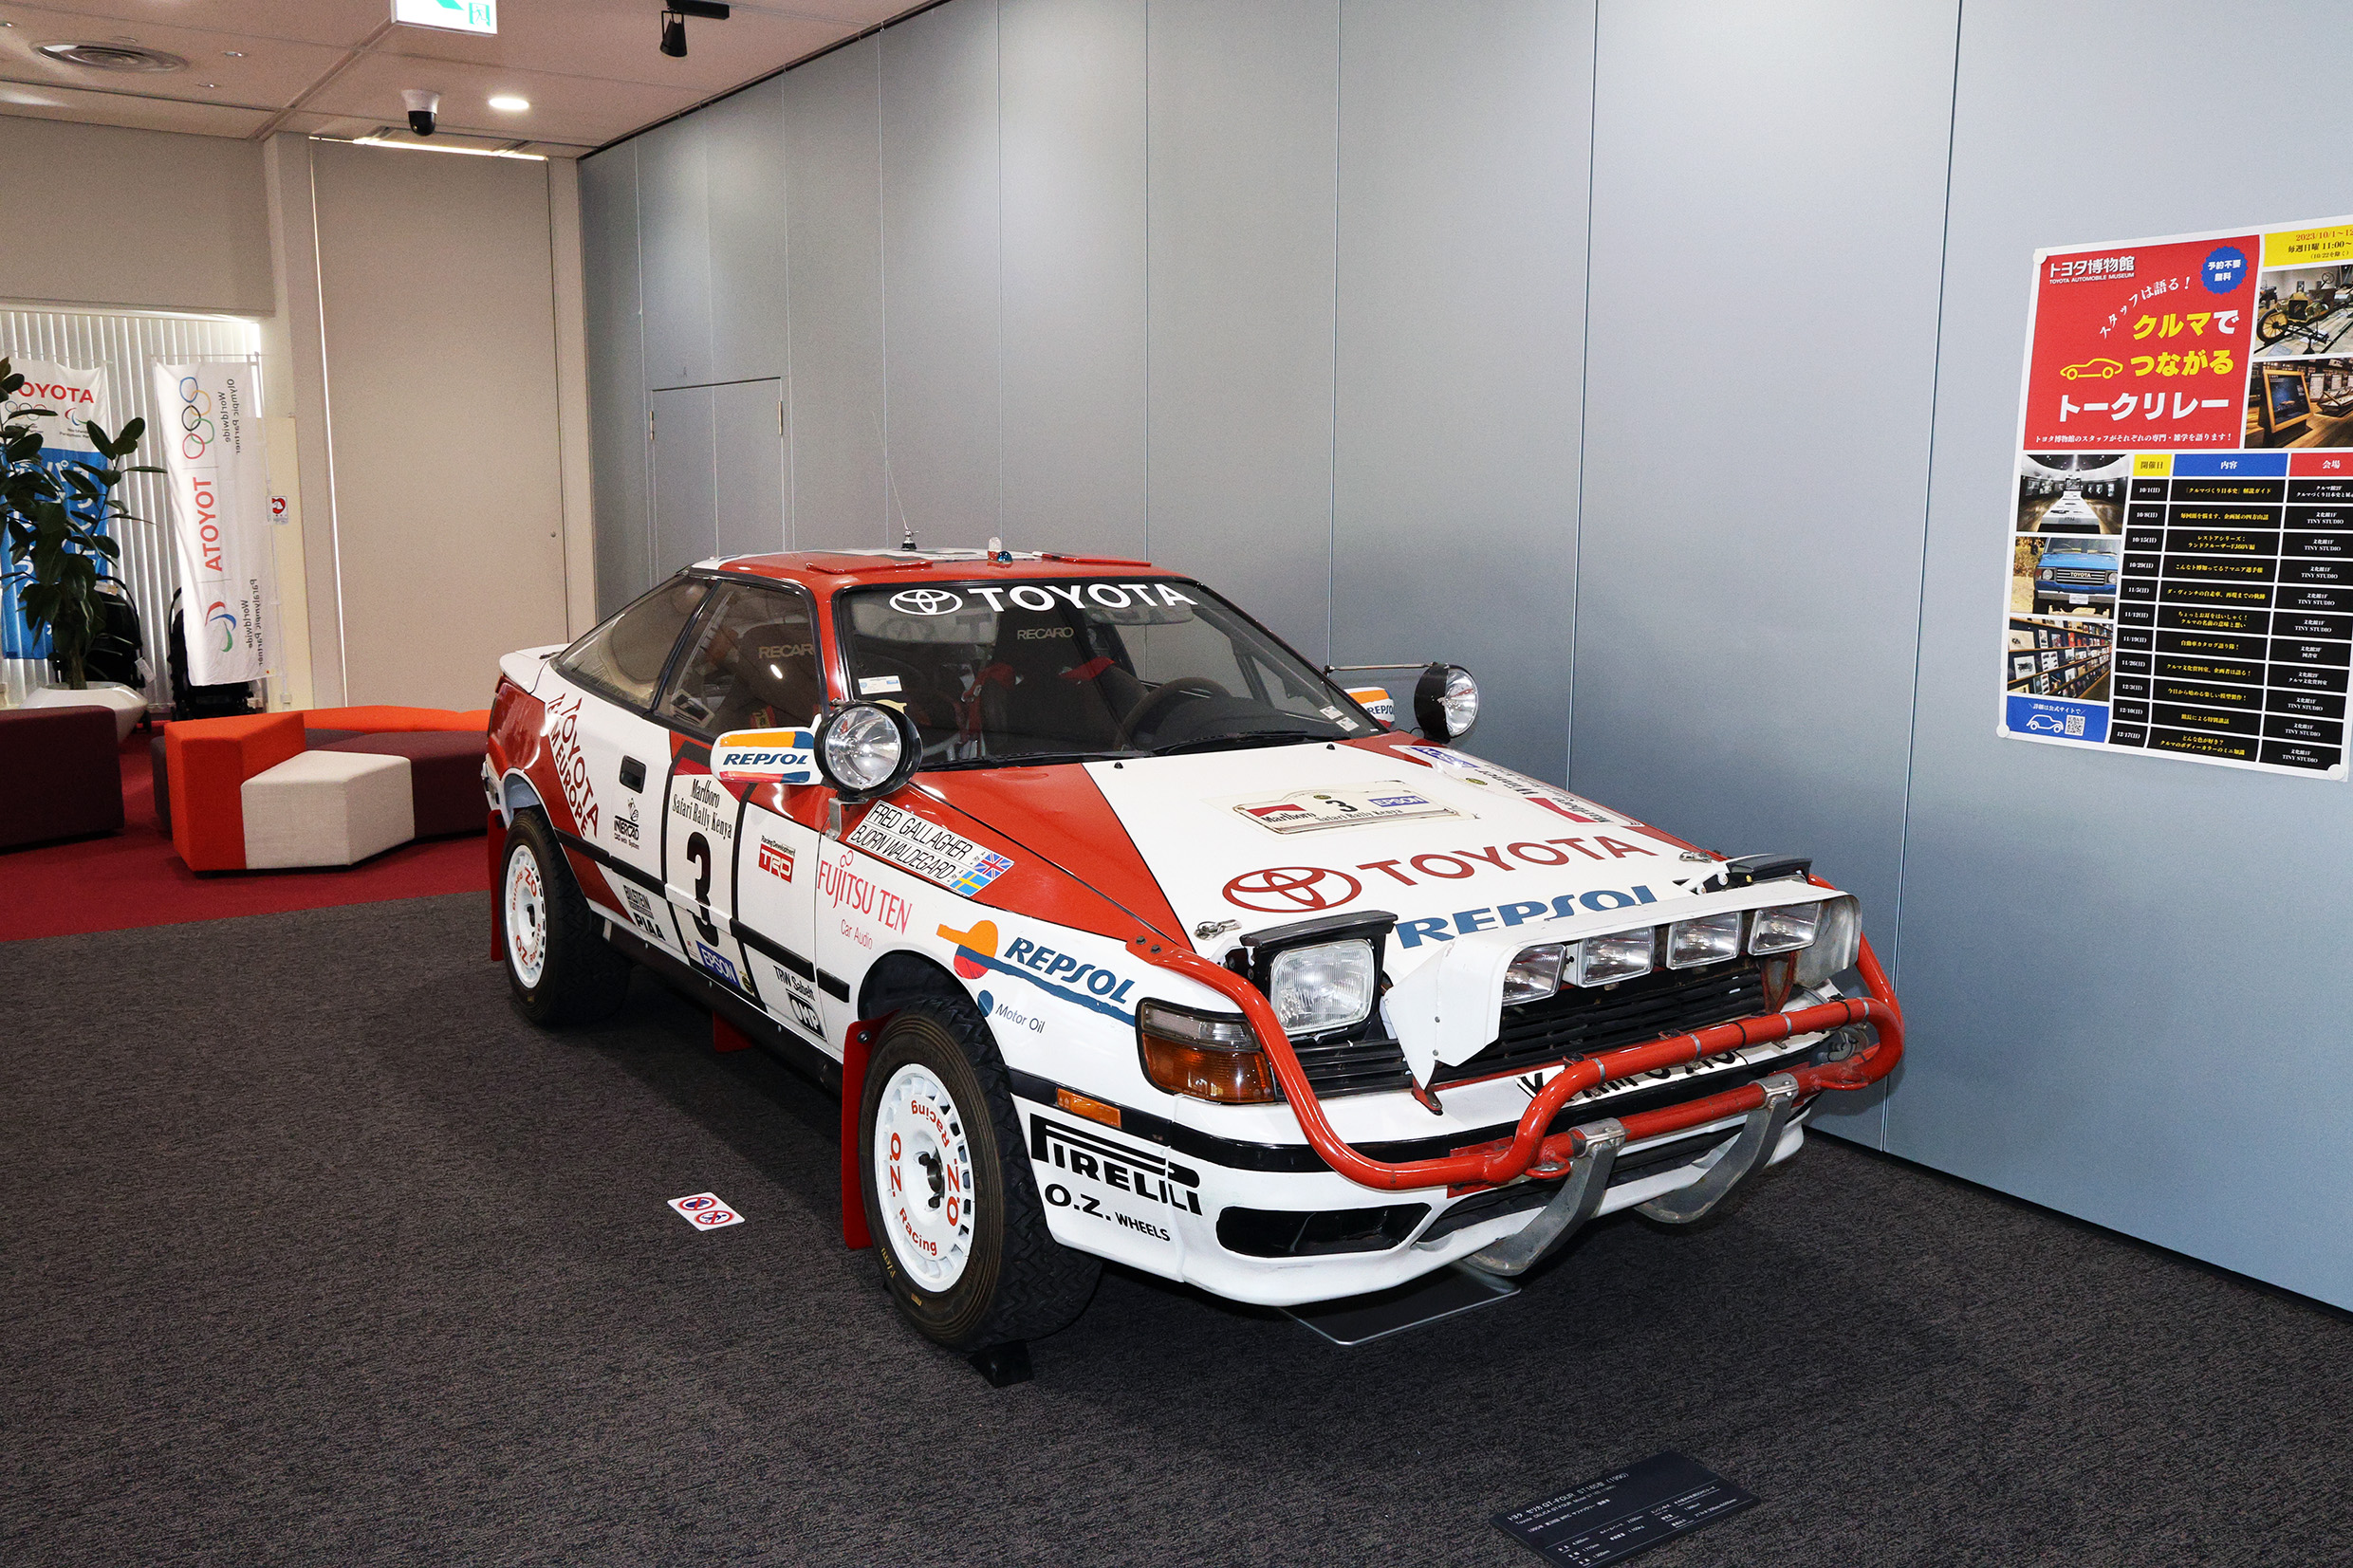 ③Toyota CELICA GT-FOUR  Model ST165 (1990) 1990 WRC Safari Rally winning car